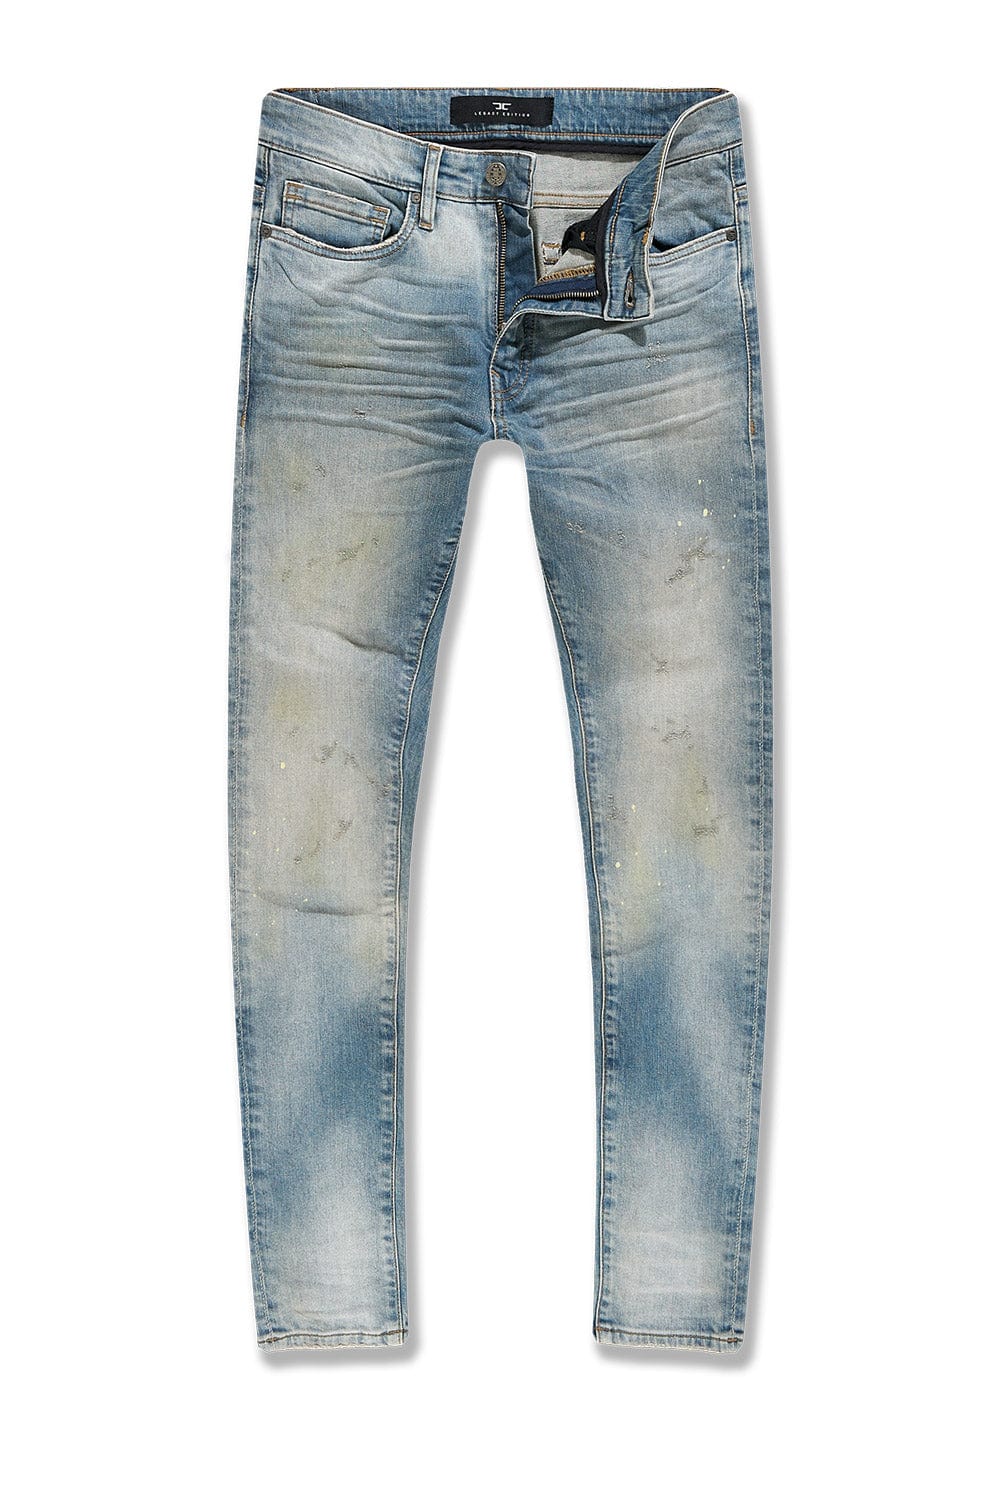 JC GERONIMO slim jeans Blue Lagoon js1189